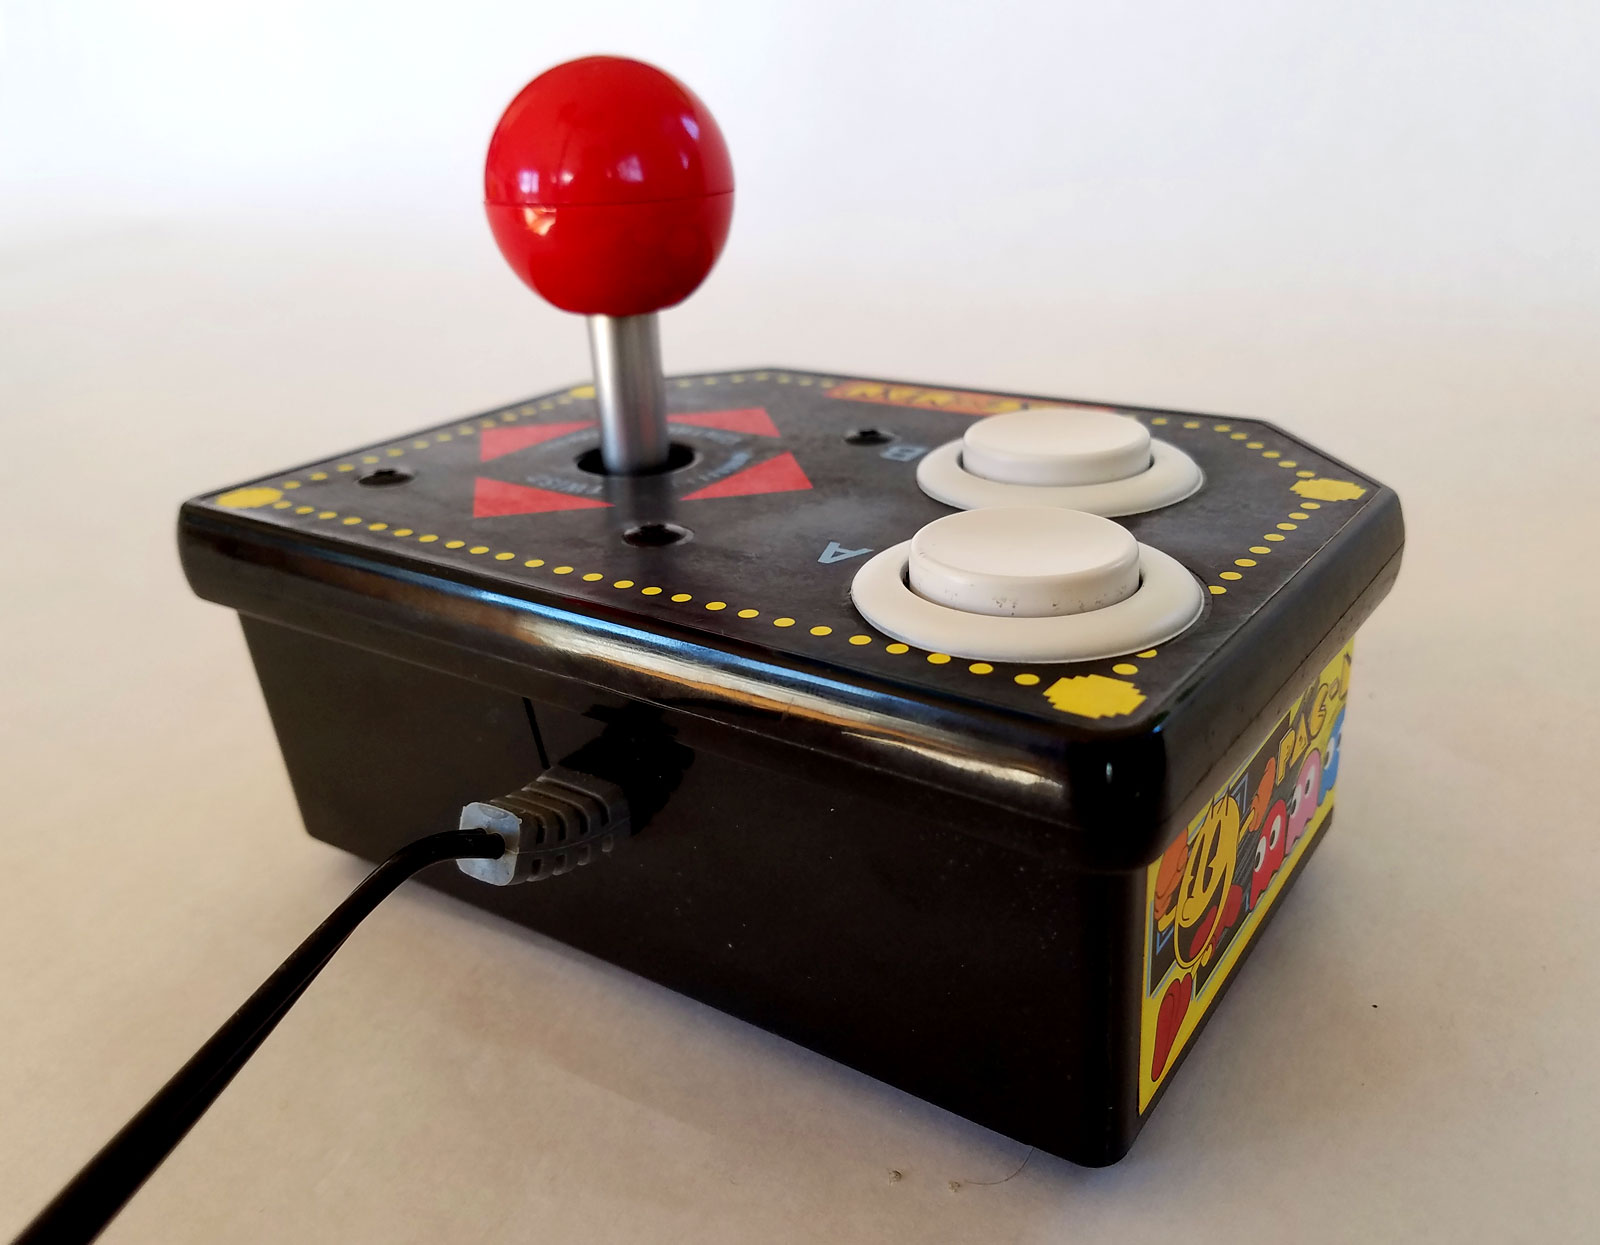 Multi-Game Arcade Joystick makes playing retro #arcade games easy ...